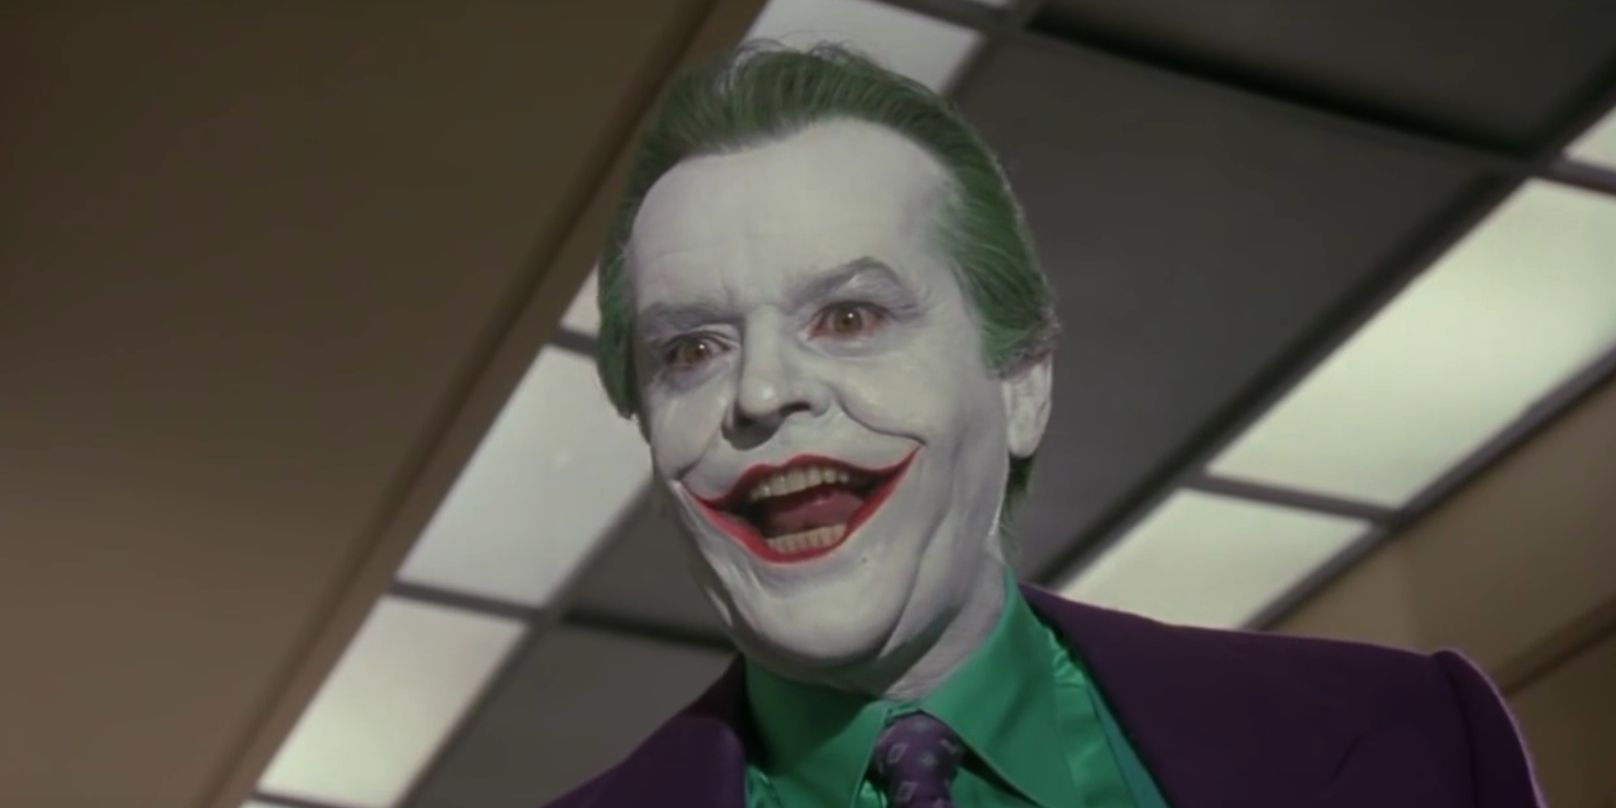 The Joker laughing in Batman